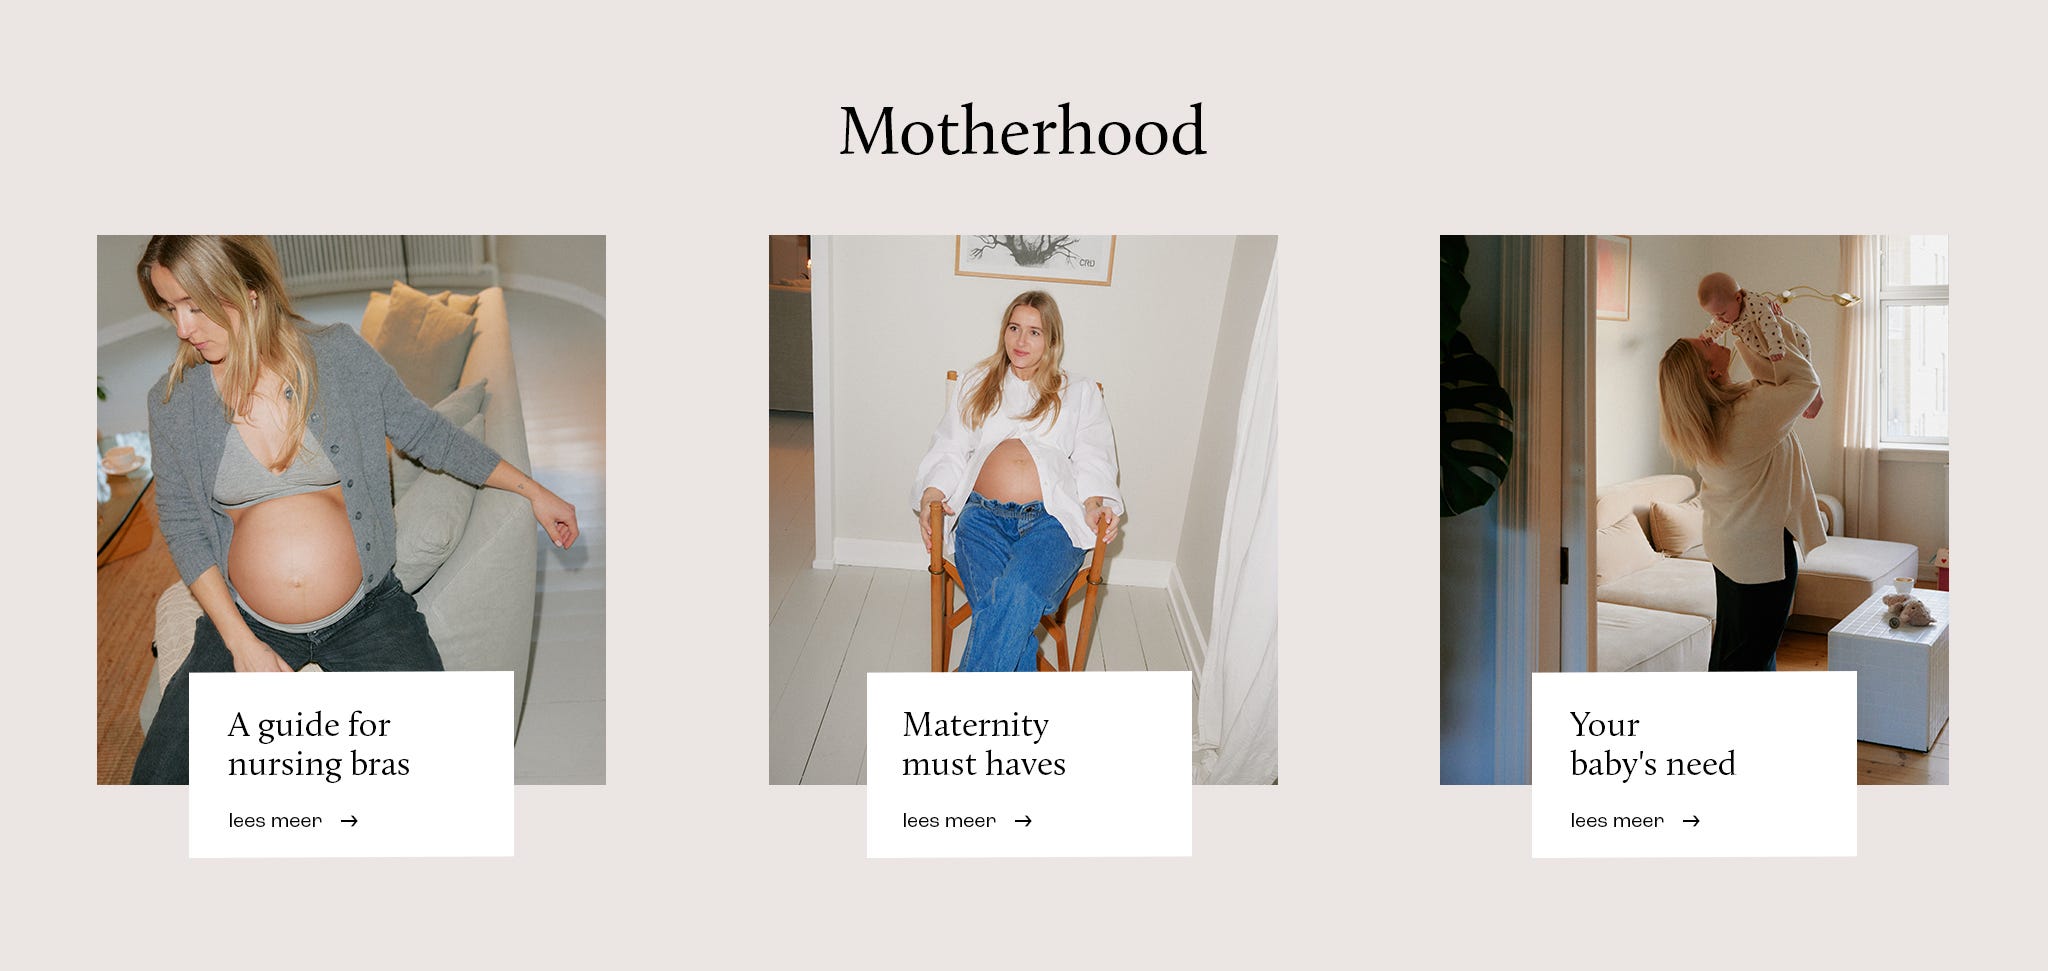 row06_motherhood-nl-be.jpg